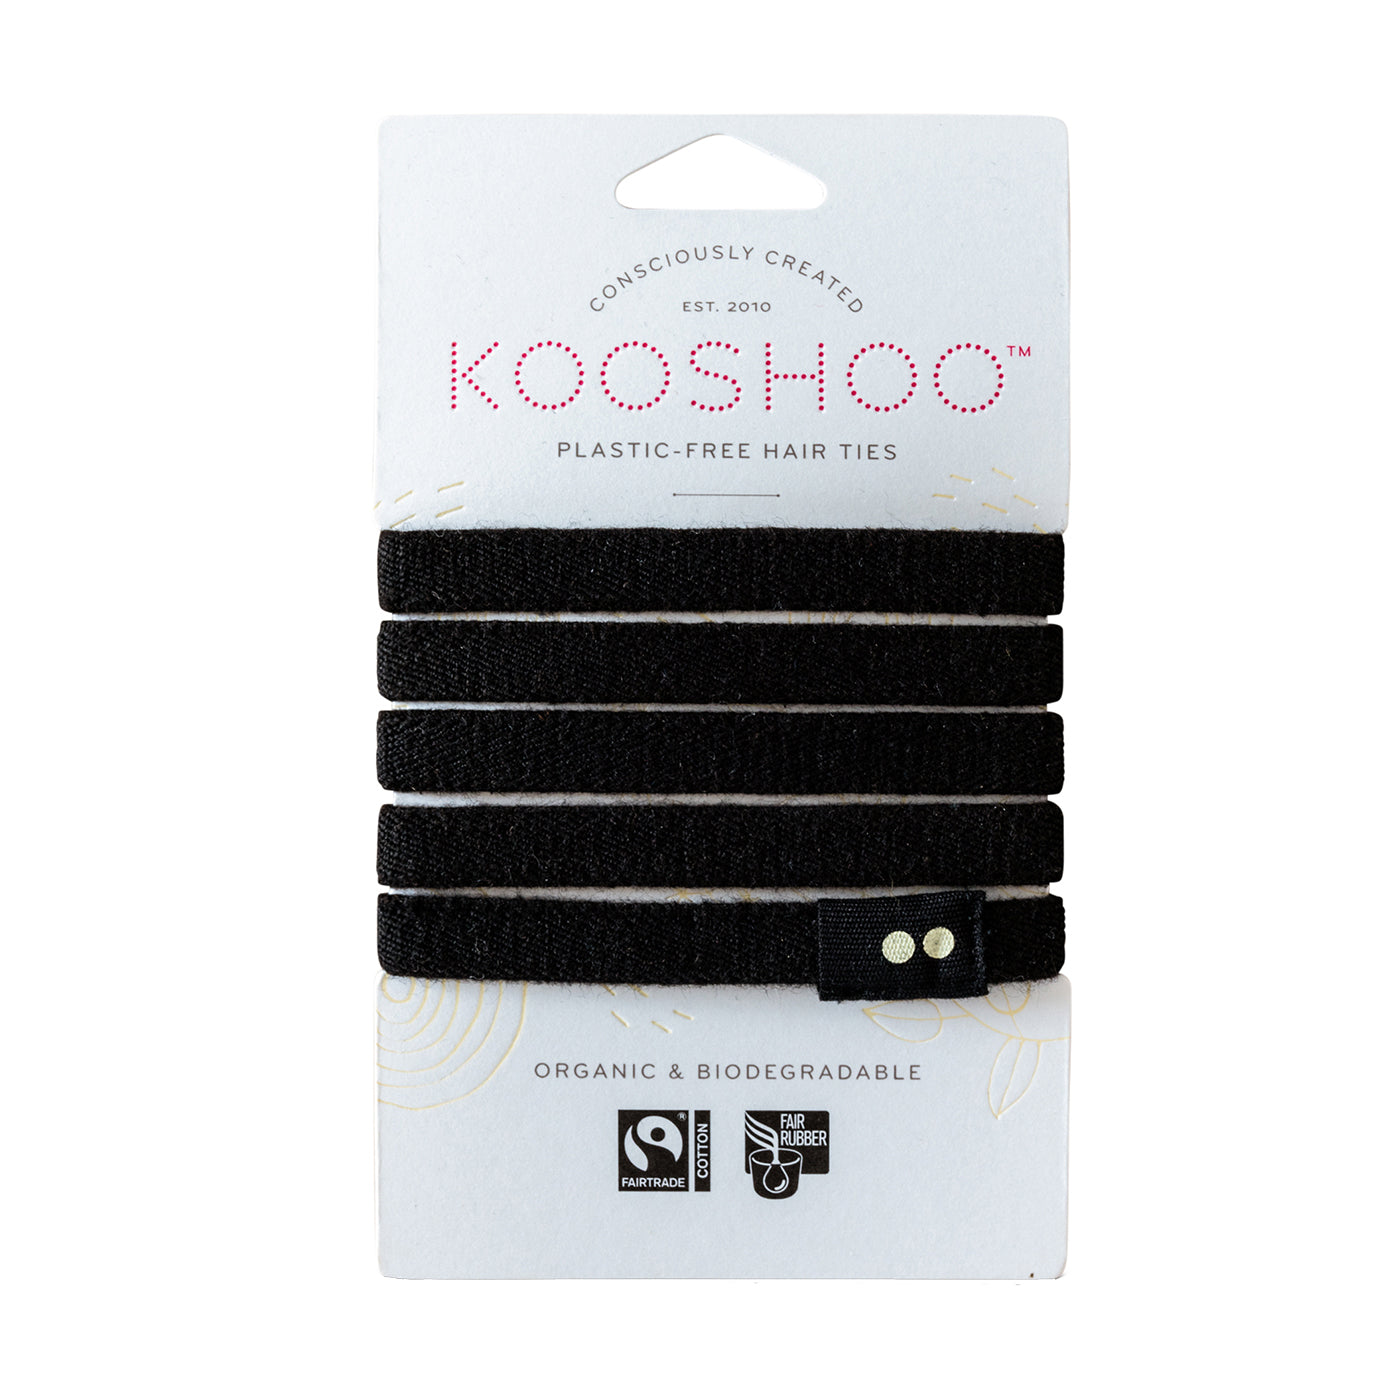 Kooshoo Plastic Free Organic Cotton Hair Ties - Black